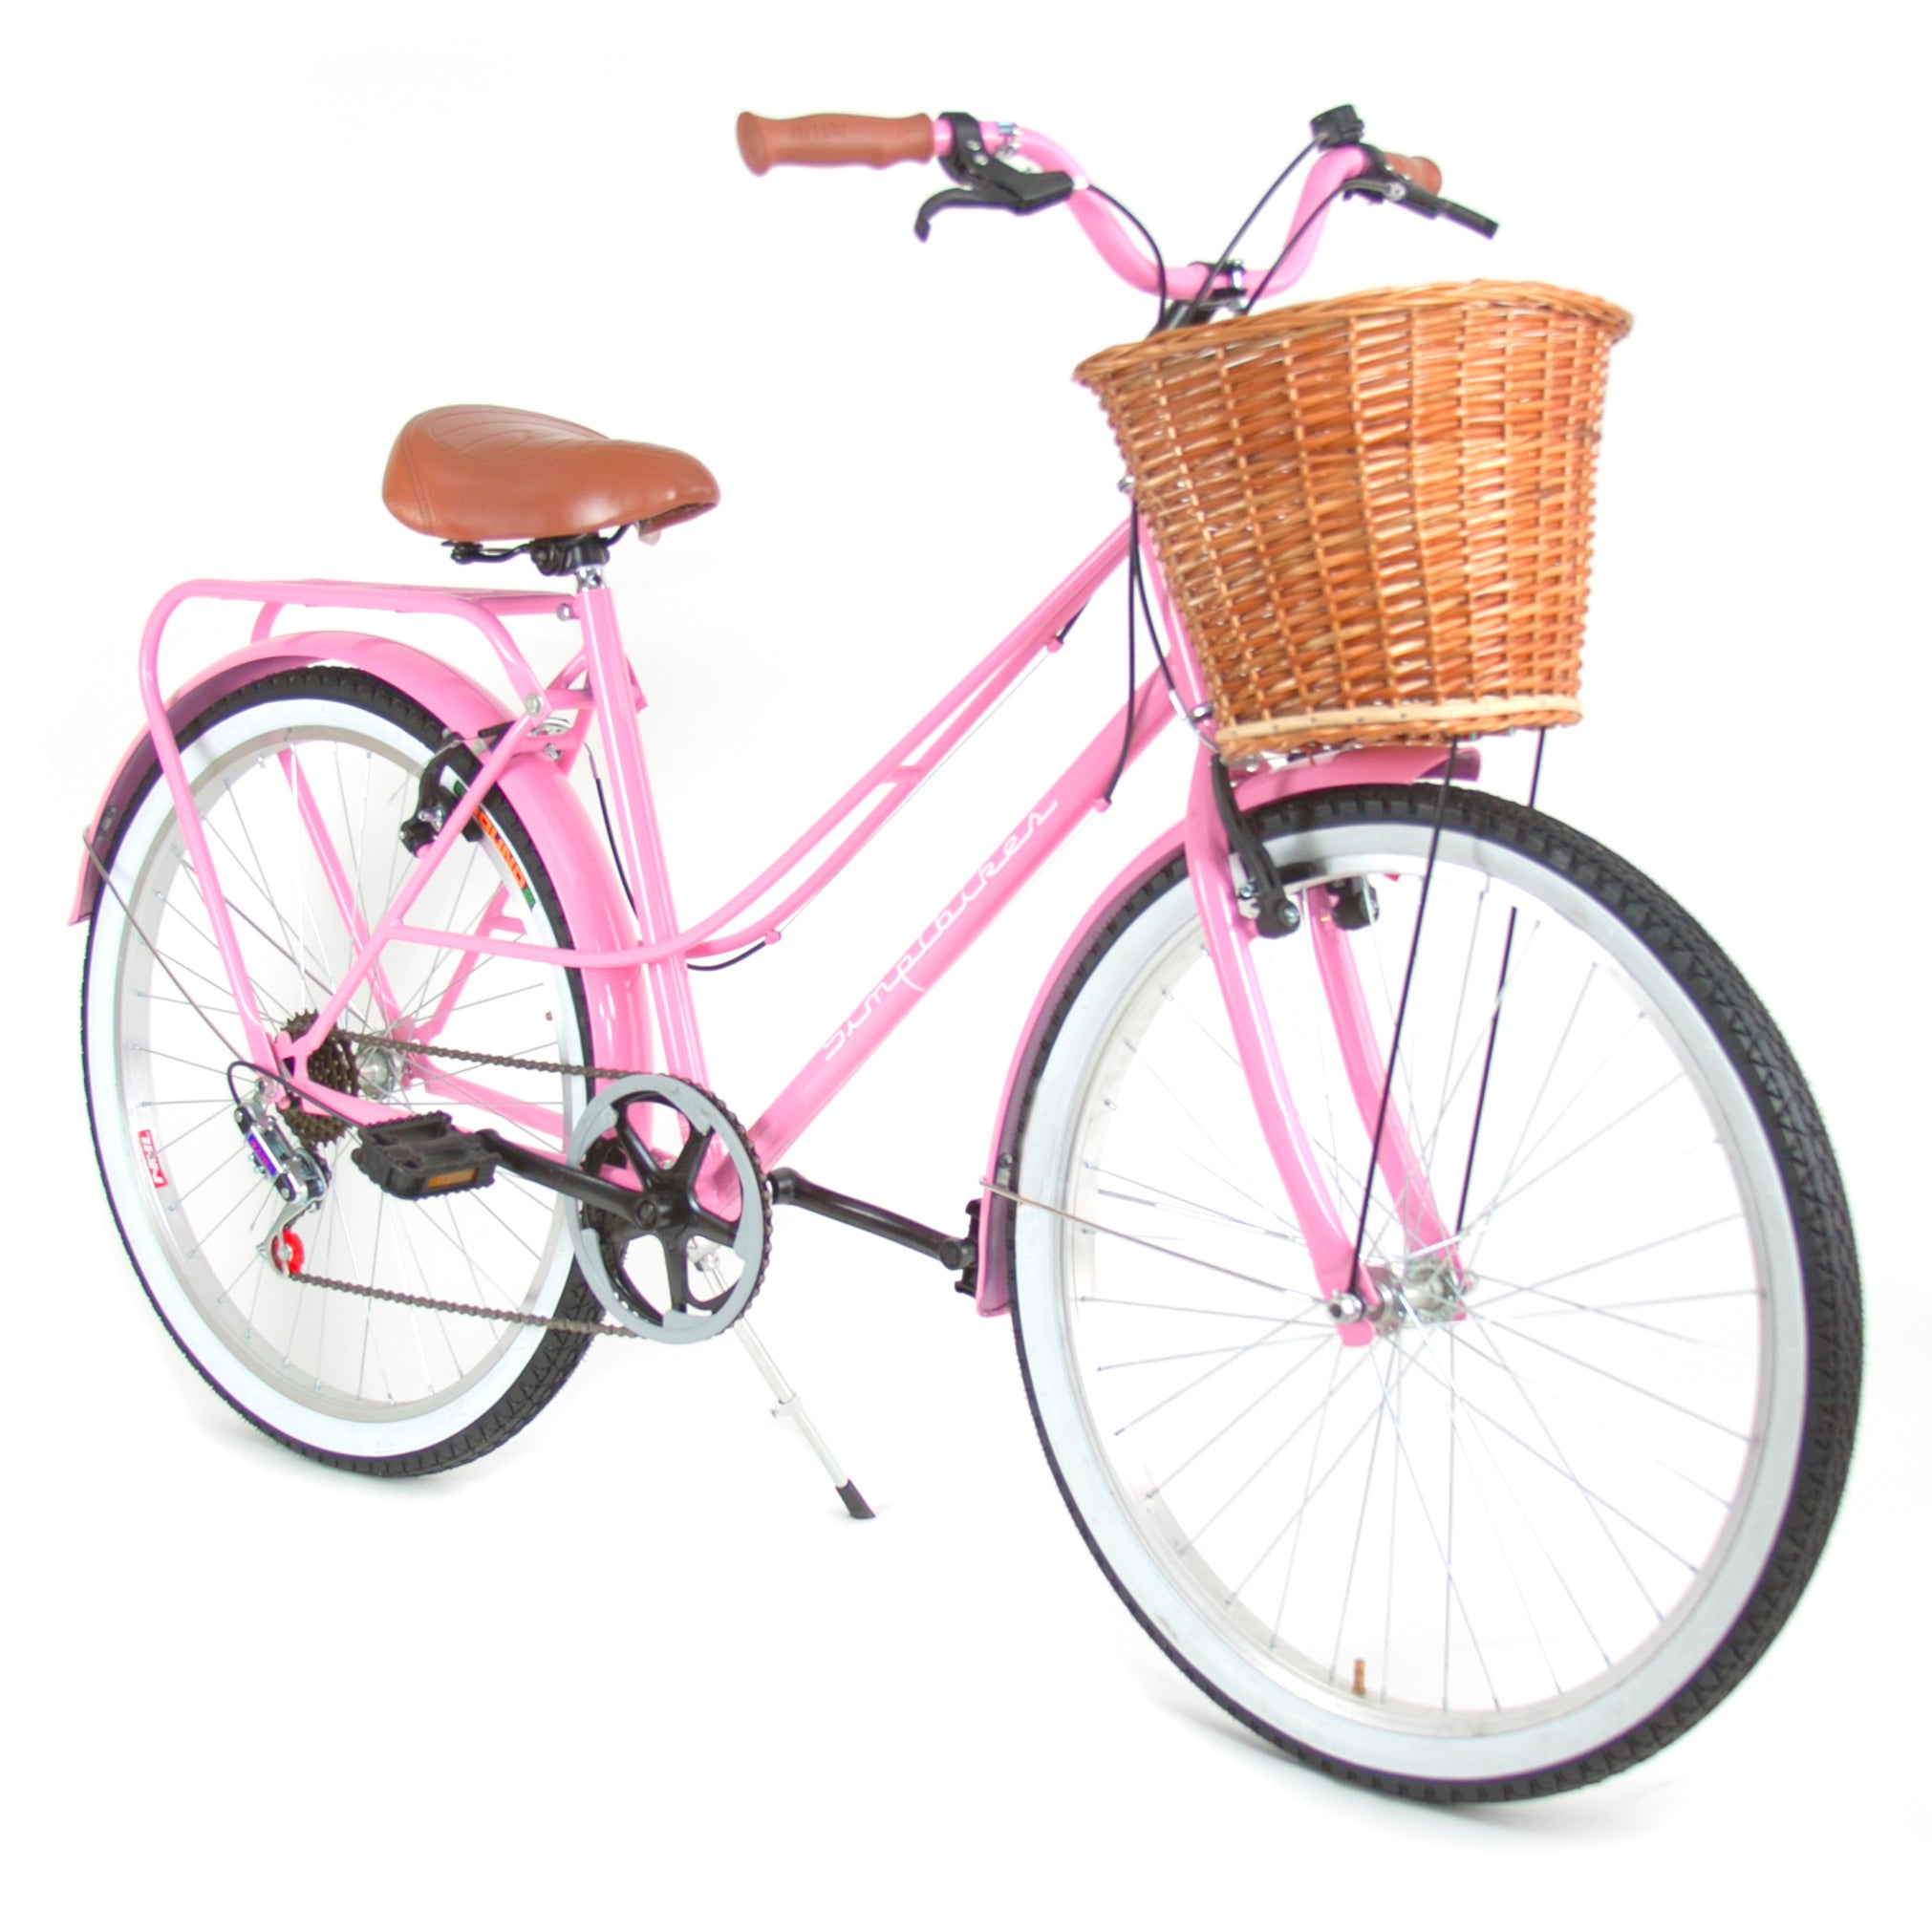 Bicicleta Vintage Rodada 26 Dama Rosa Canasta de Mimbre. – Bicicletas